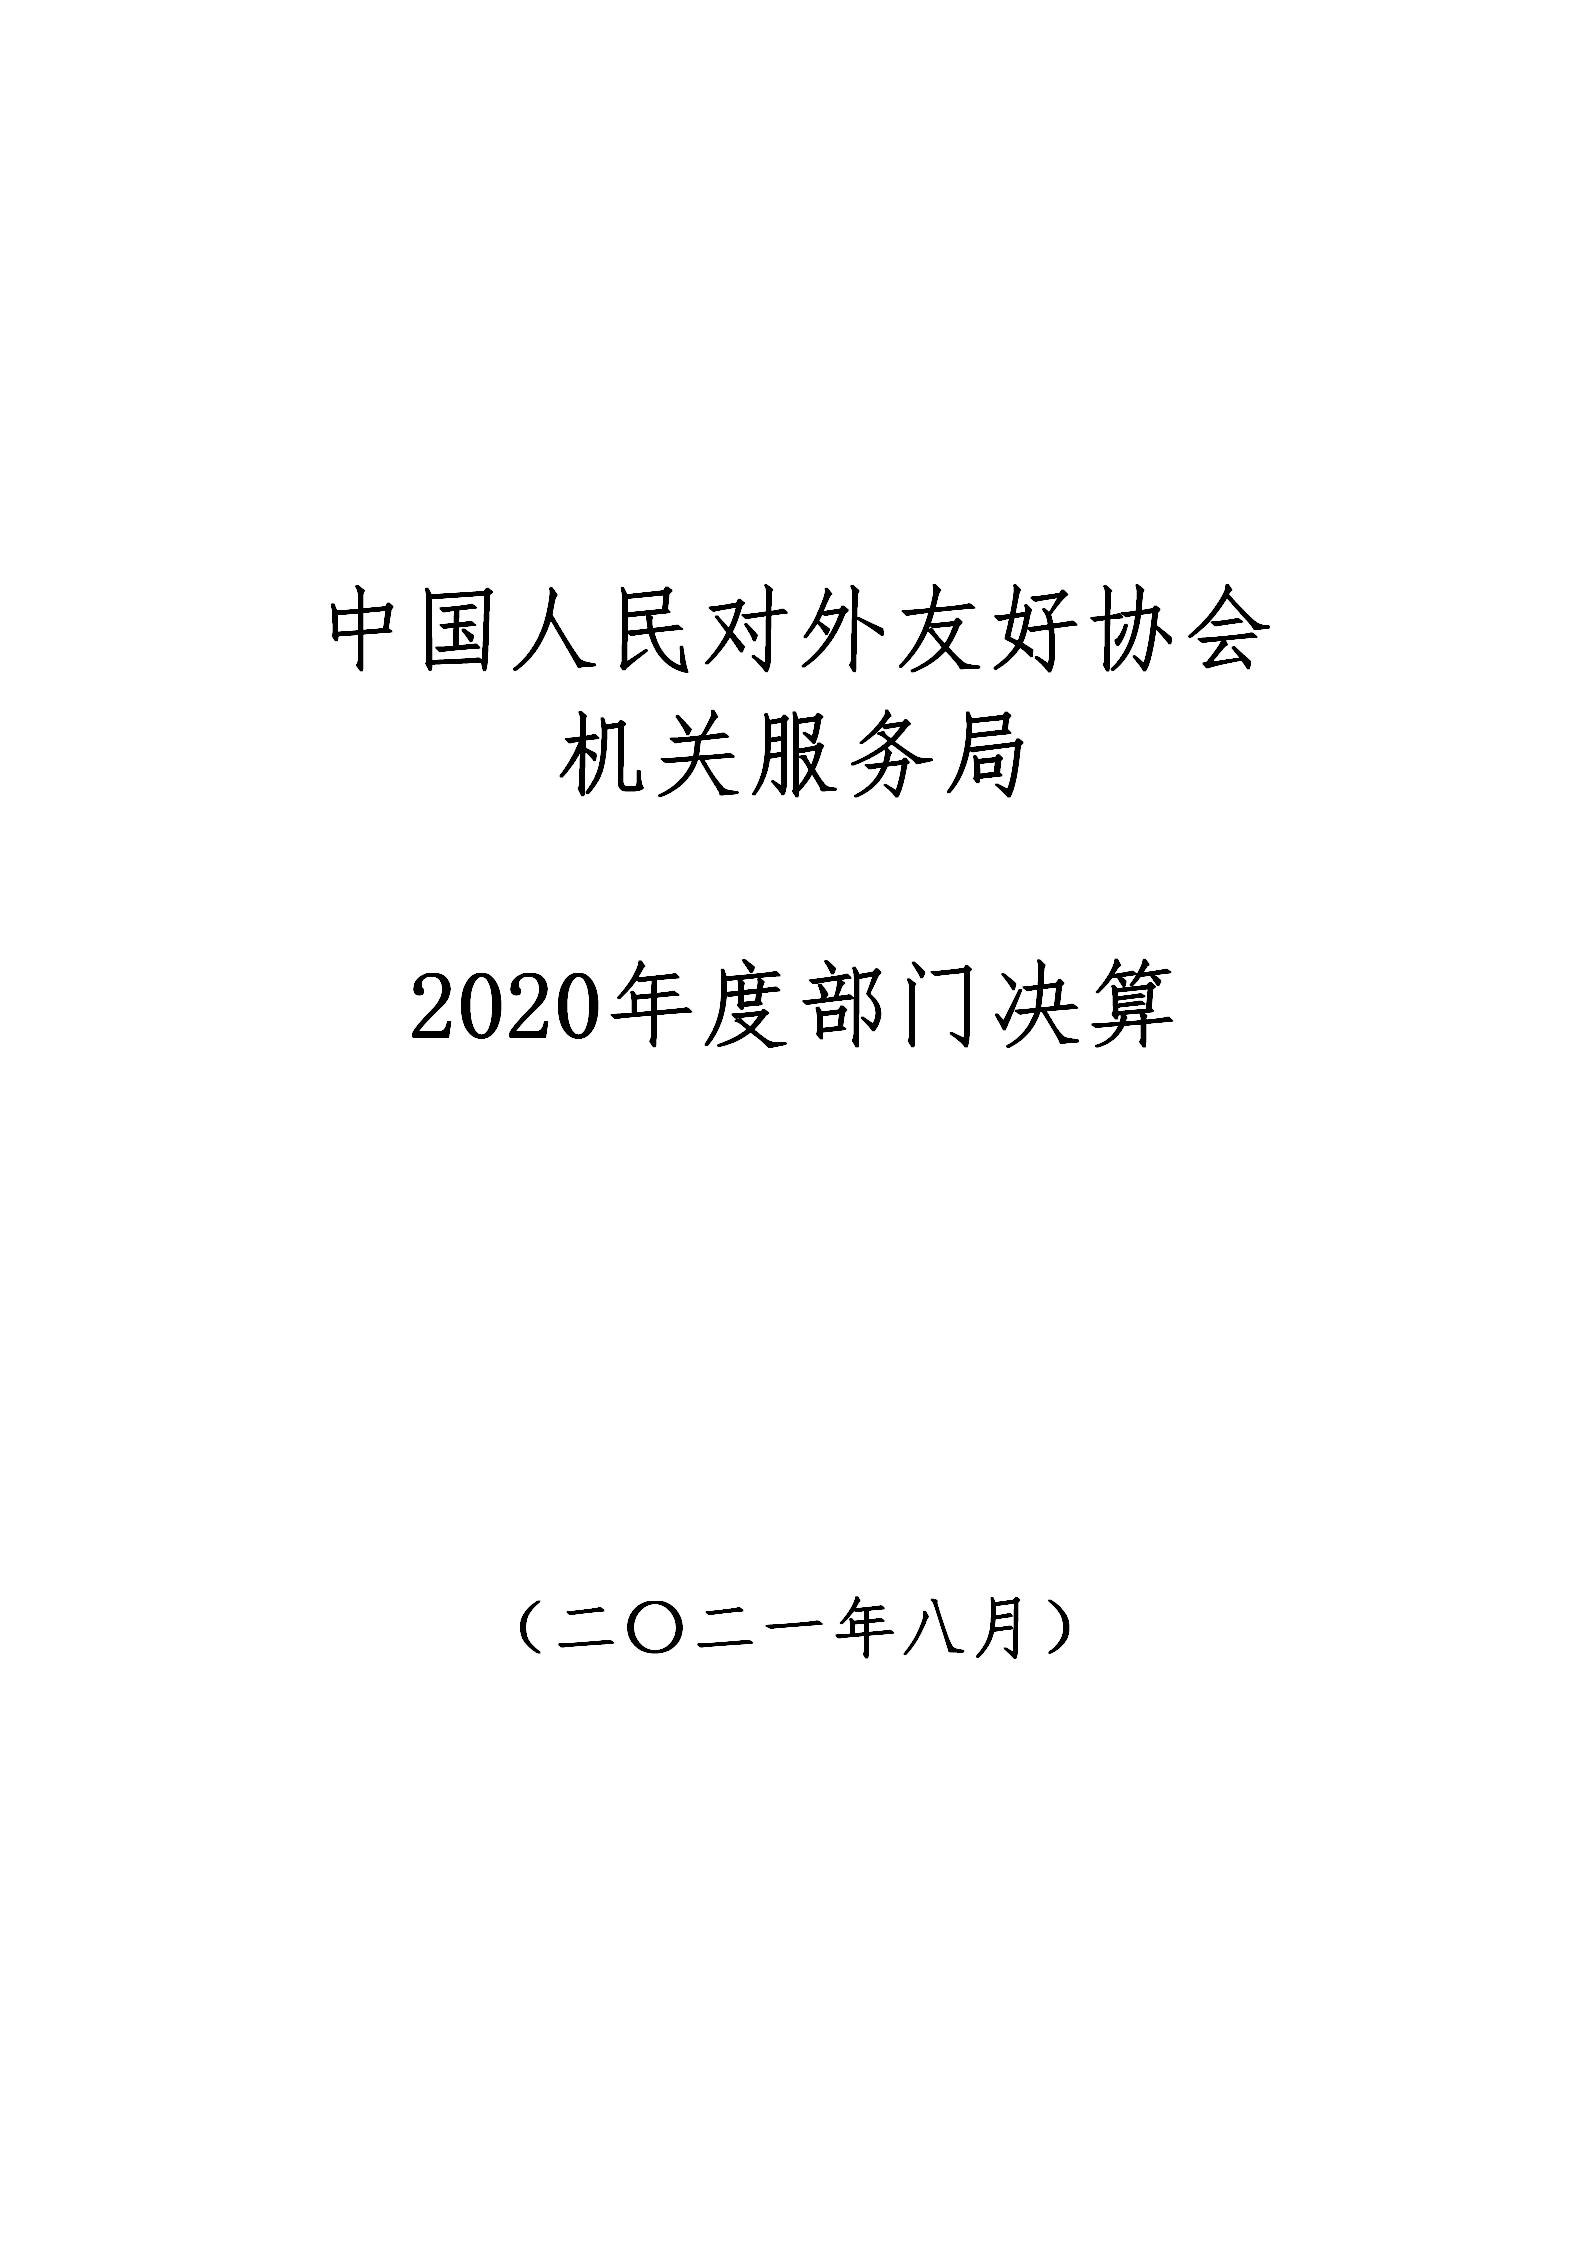 188bet亚洲机关服务局2020决算公开_01.jpg